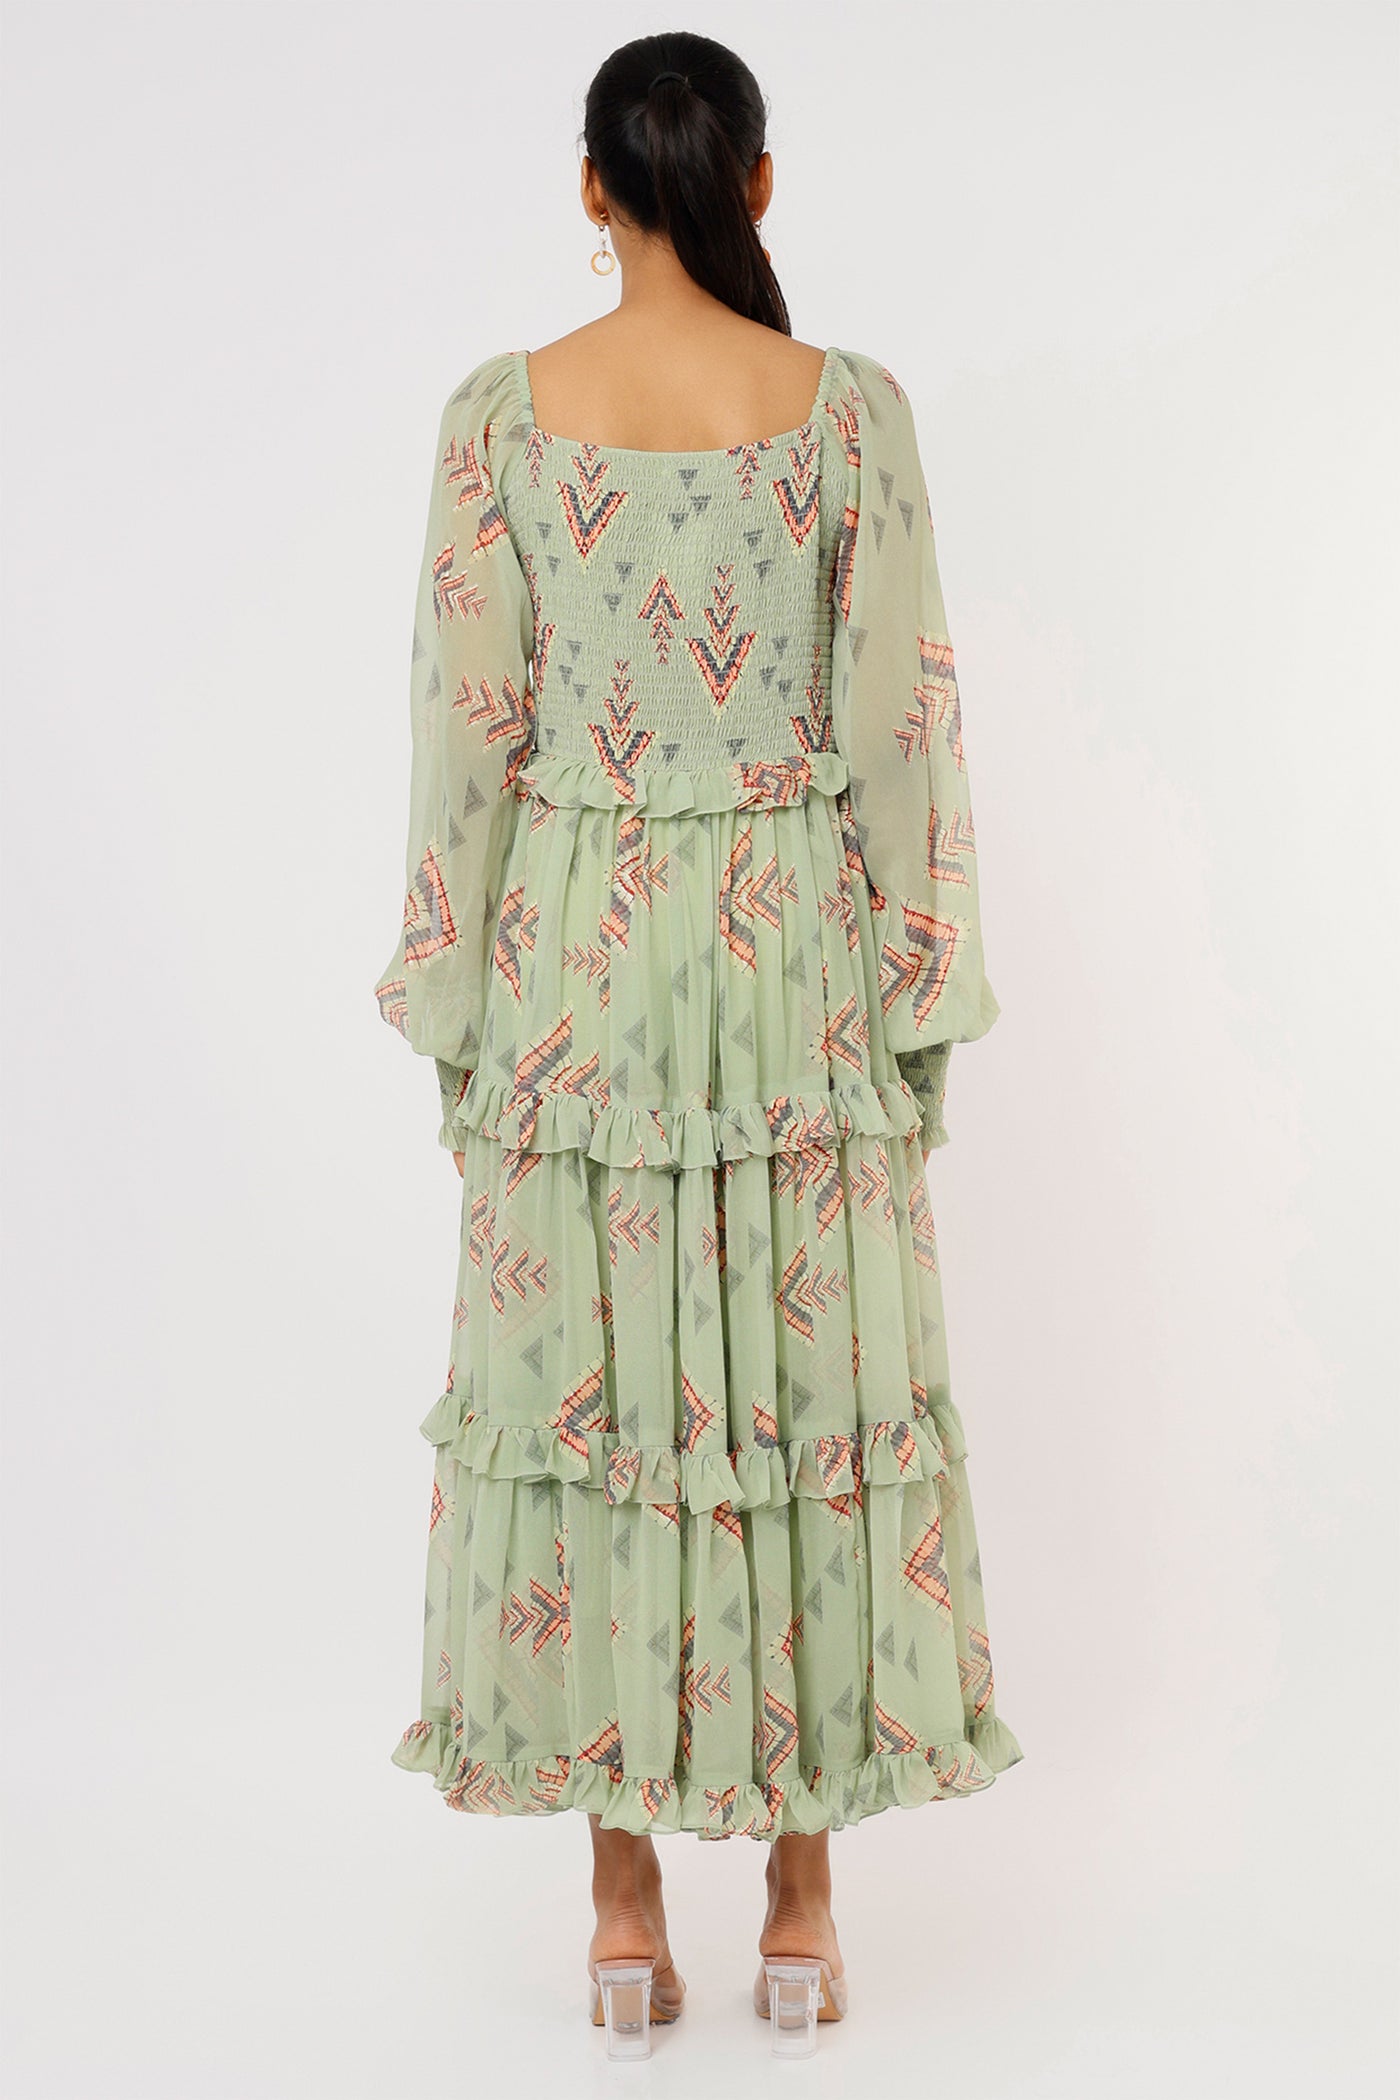 Gopi vaid Talia Shirred Dress mint green festive Indian designer wear online shopping melange singapore